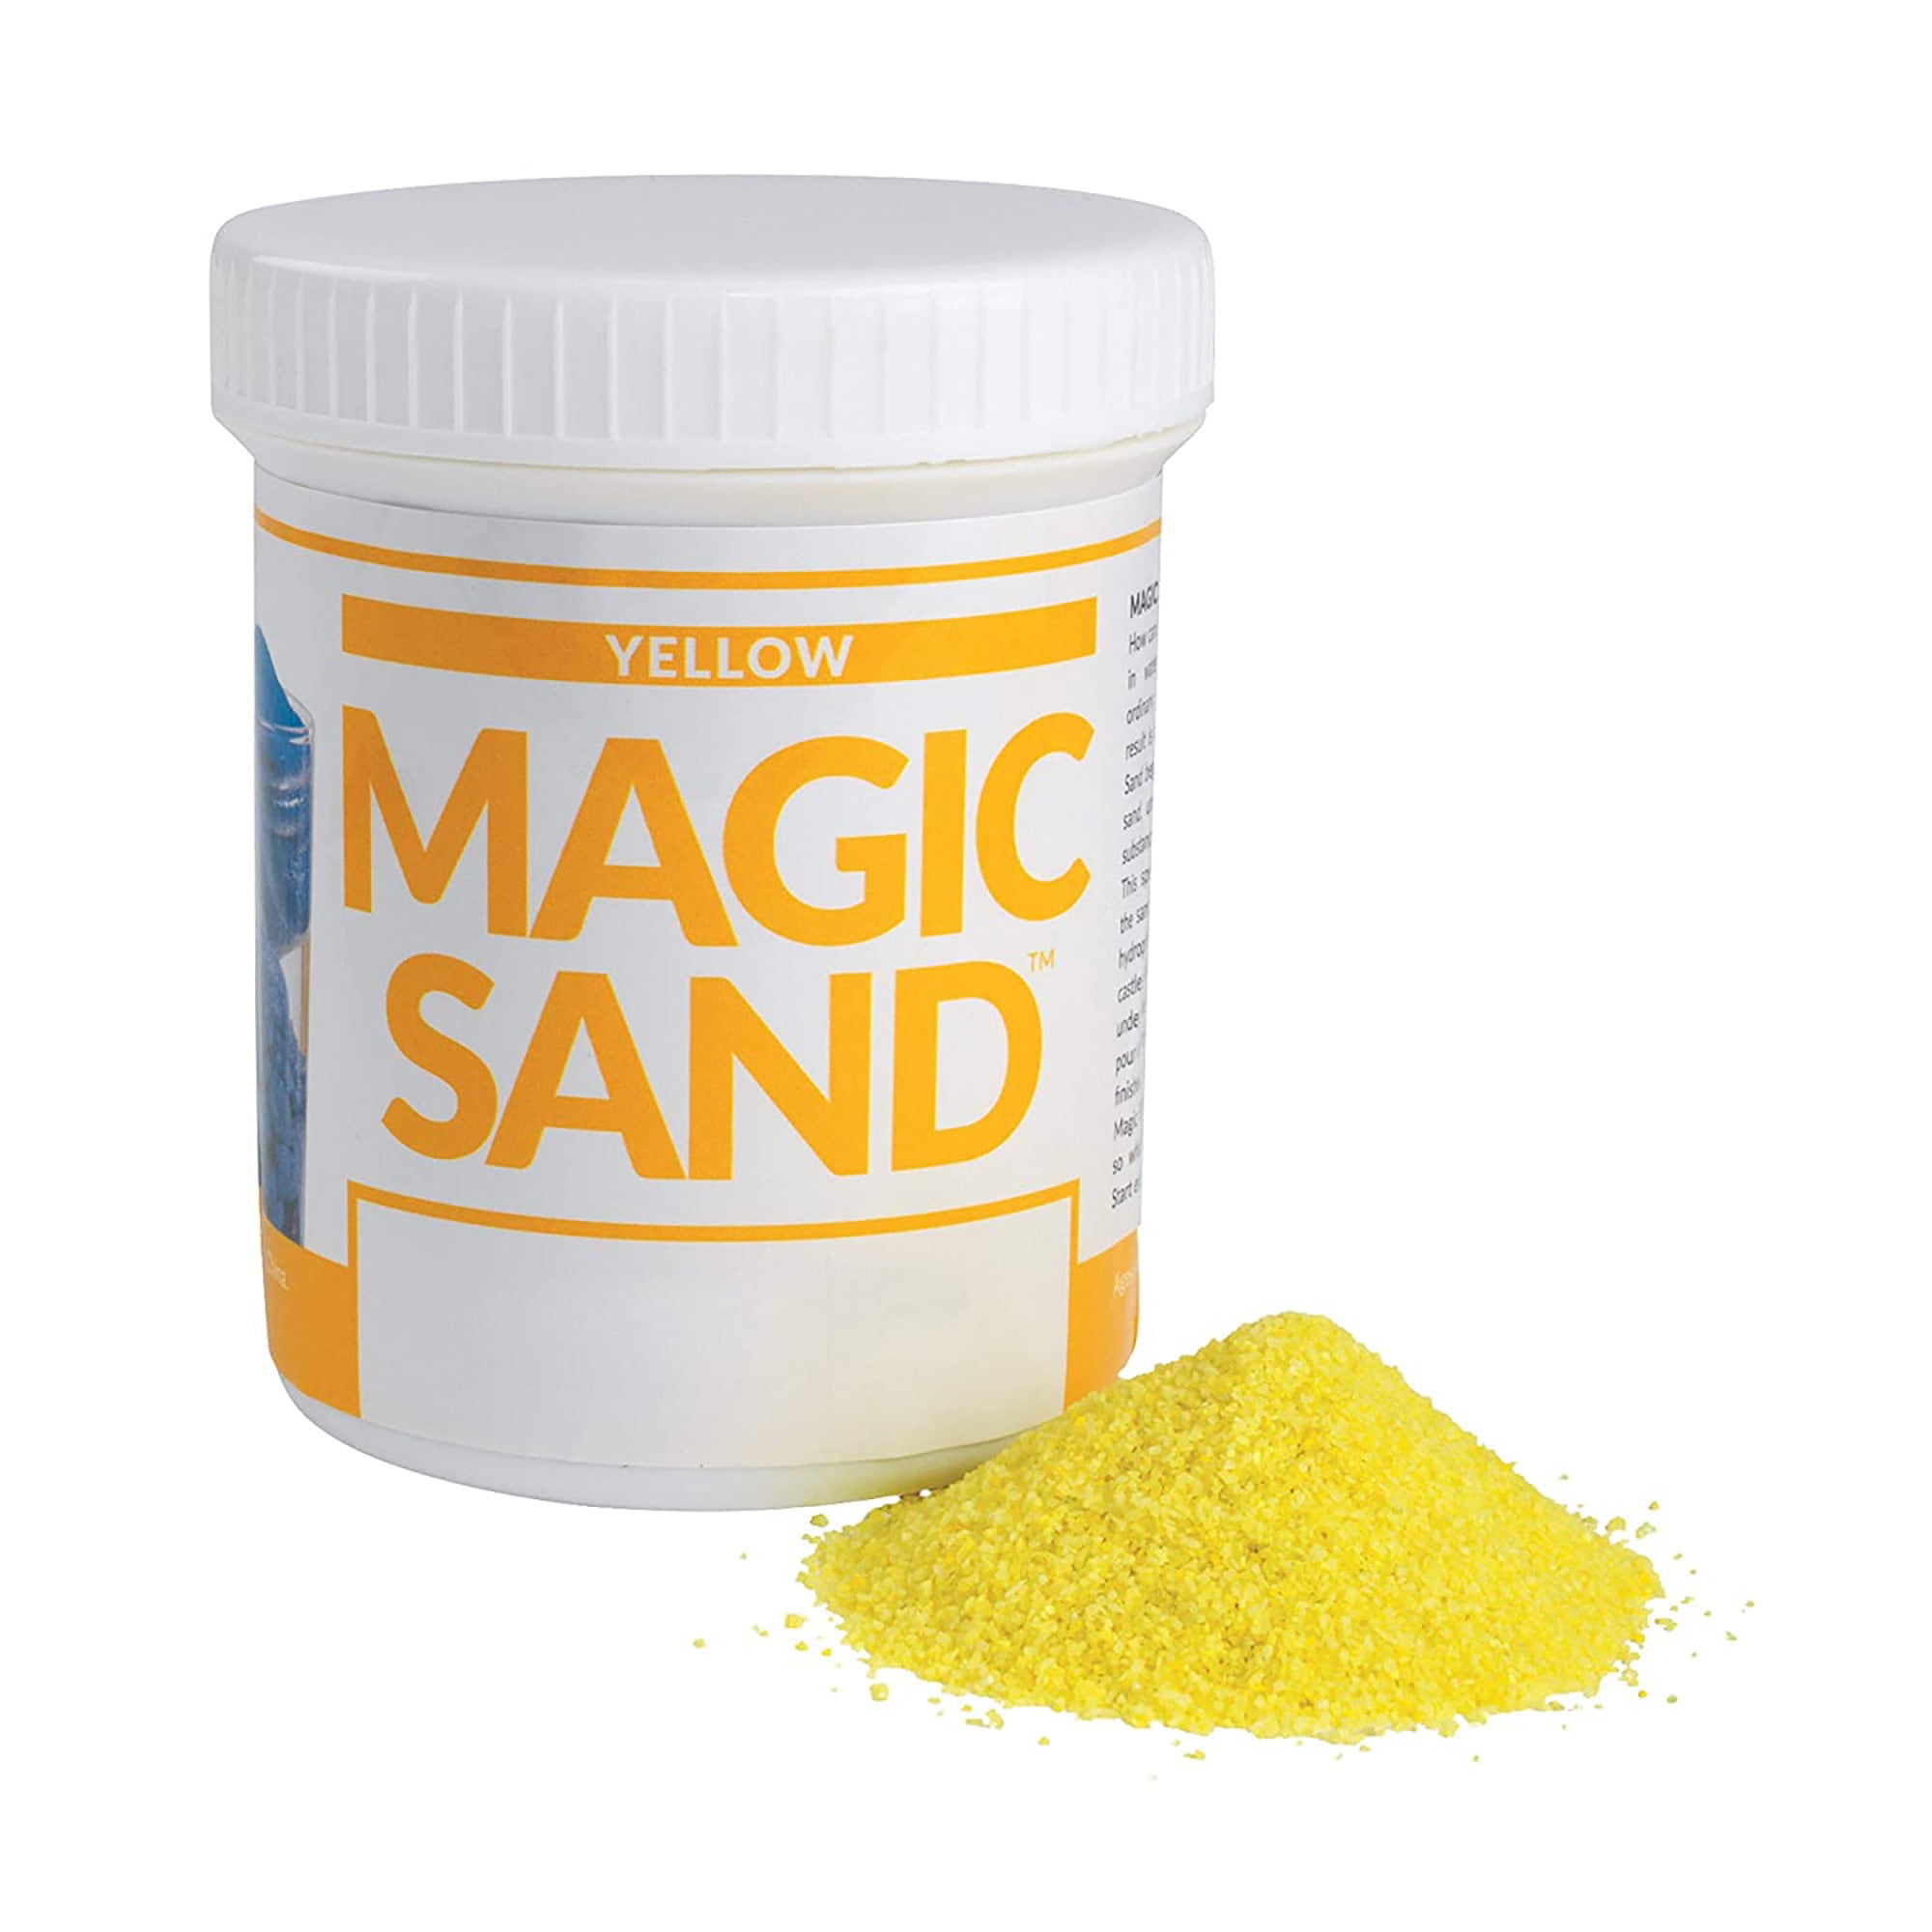 Steve Spangler Science Magic Sand - Yellow